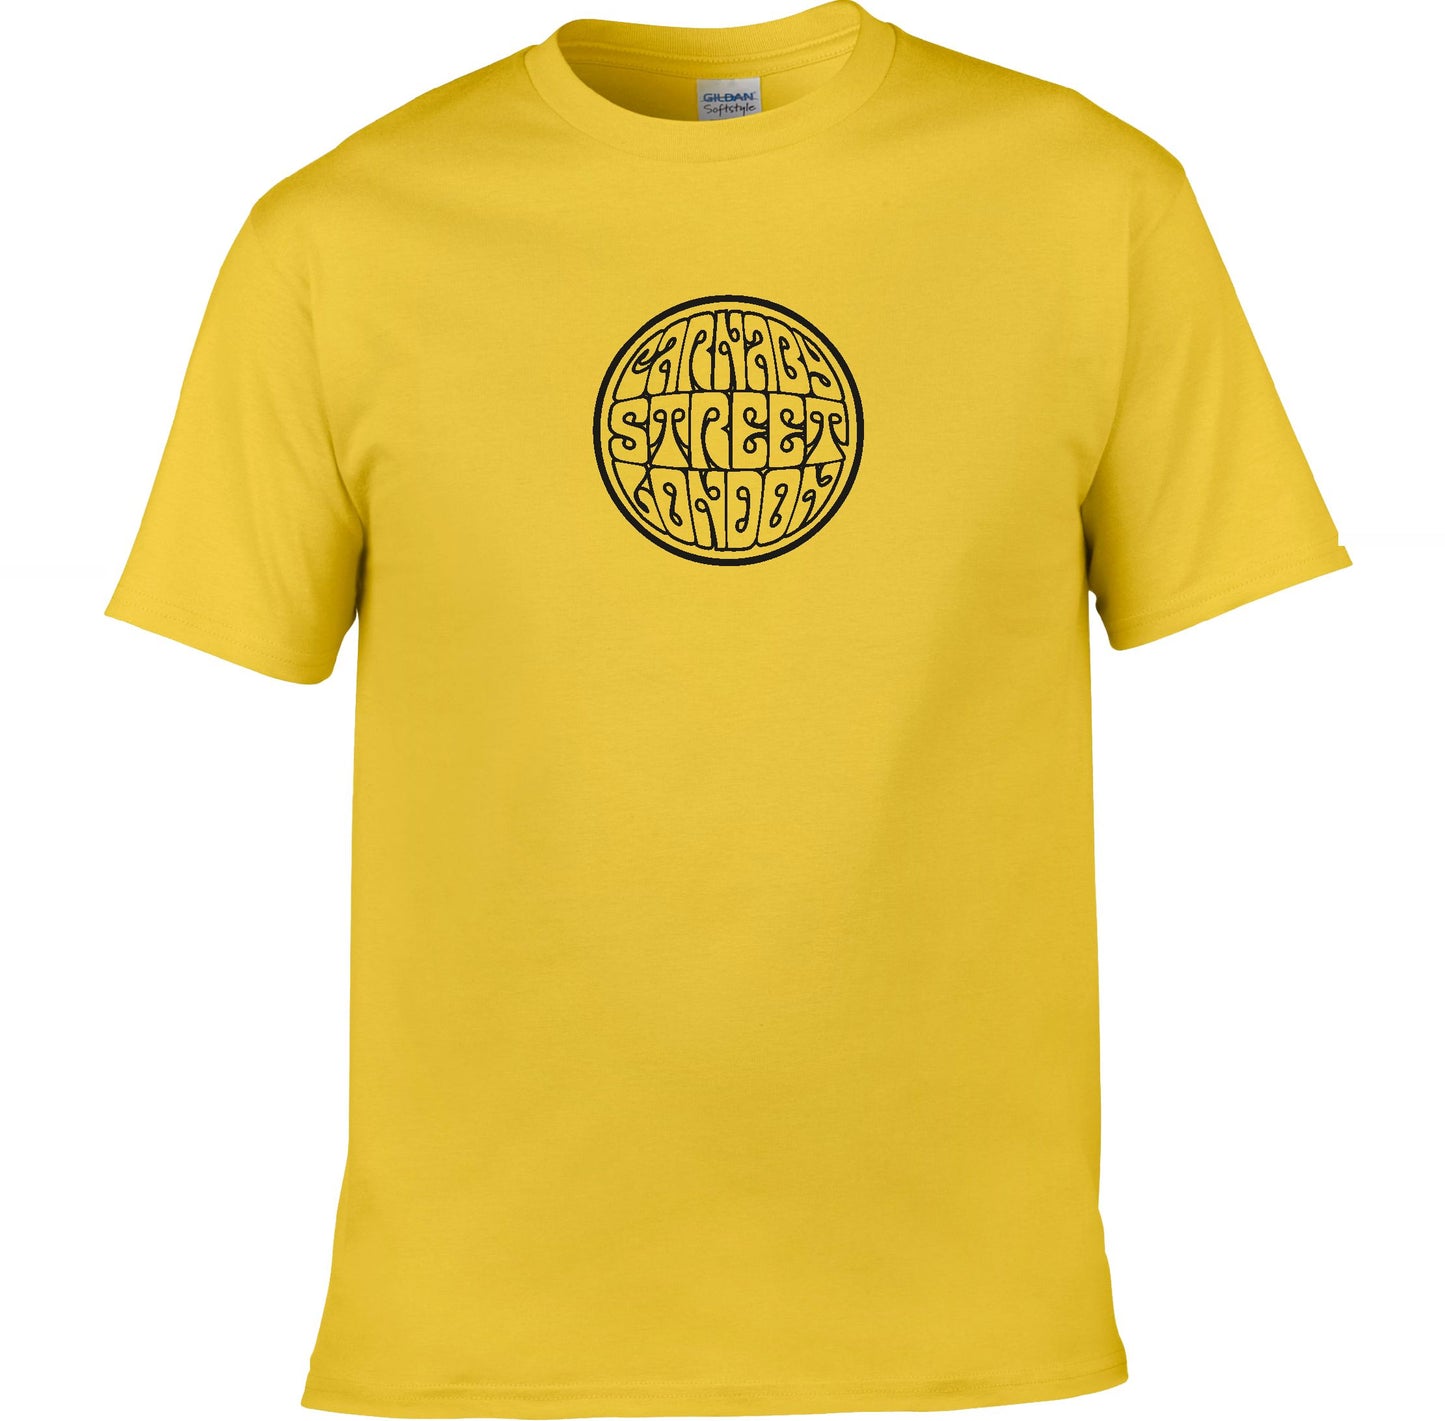 Carnaby Street T-Shirt - London, Souvenir, Various Colours